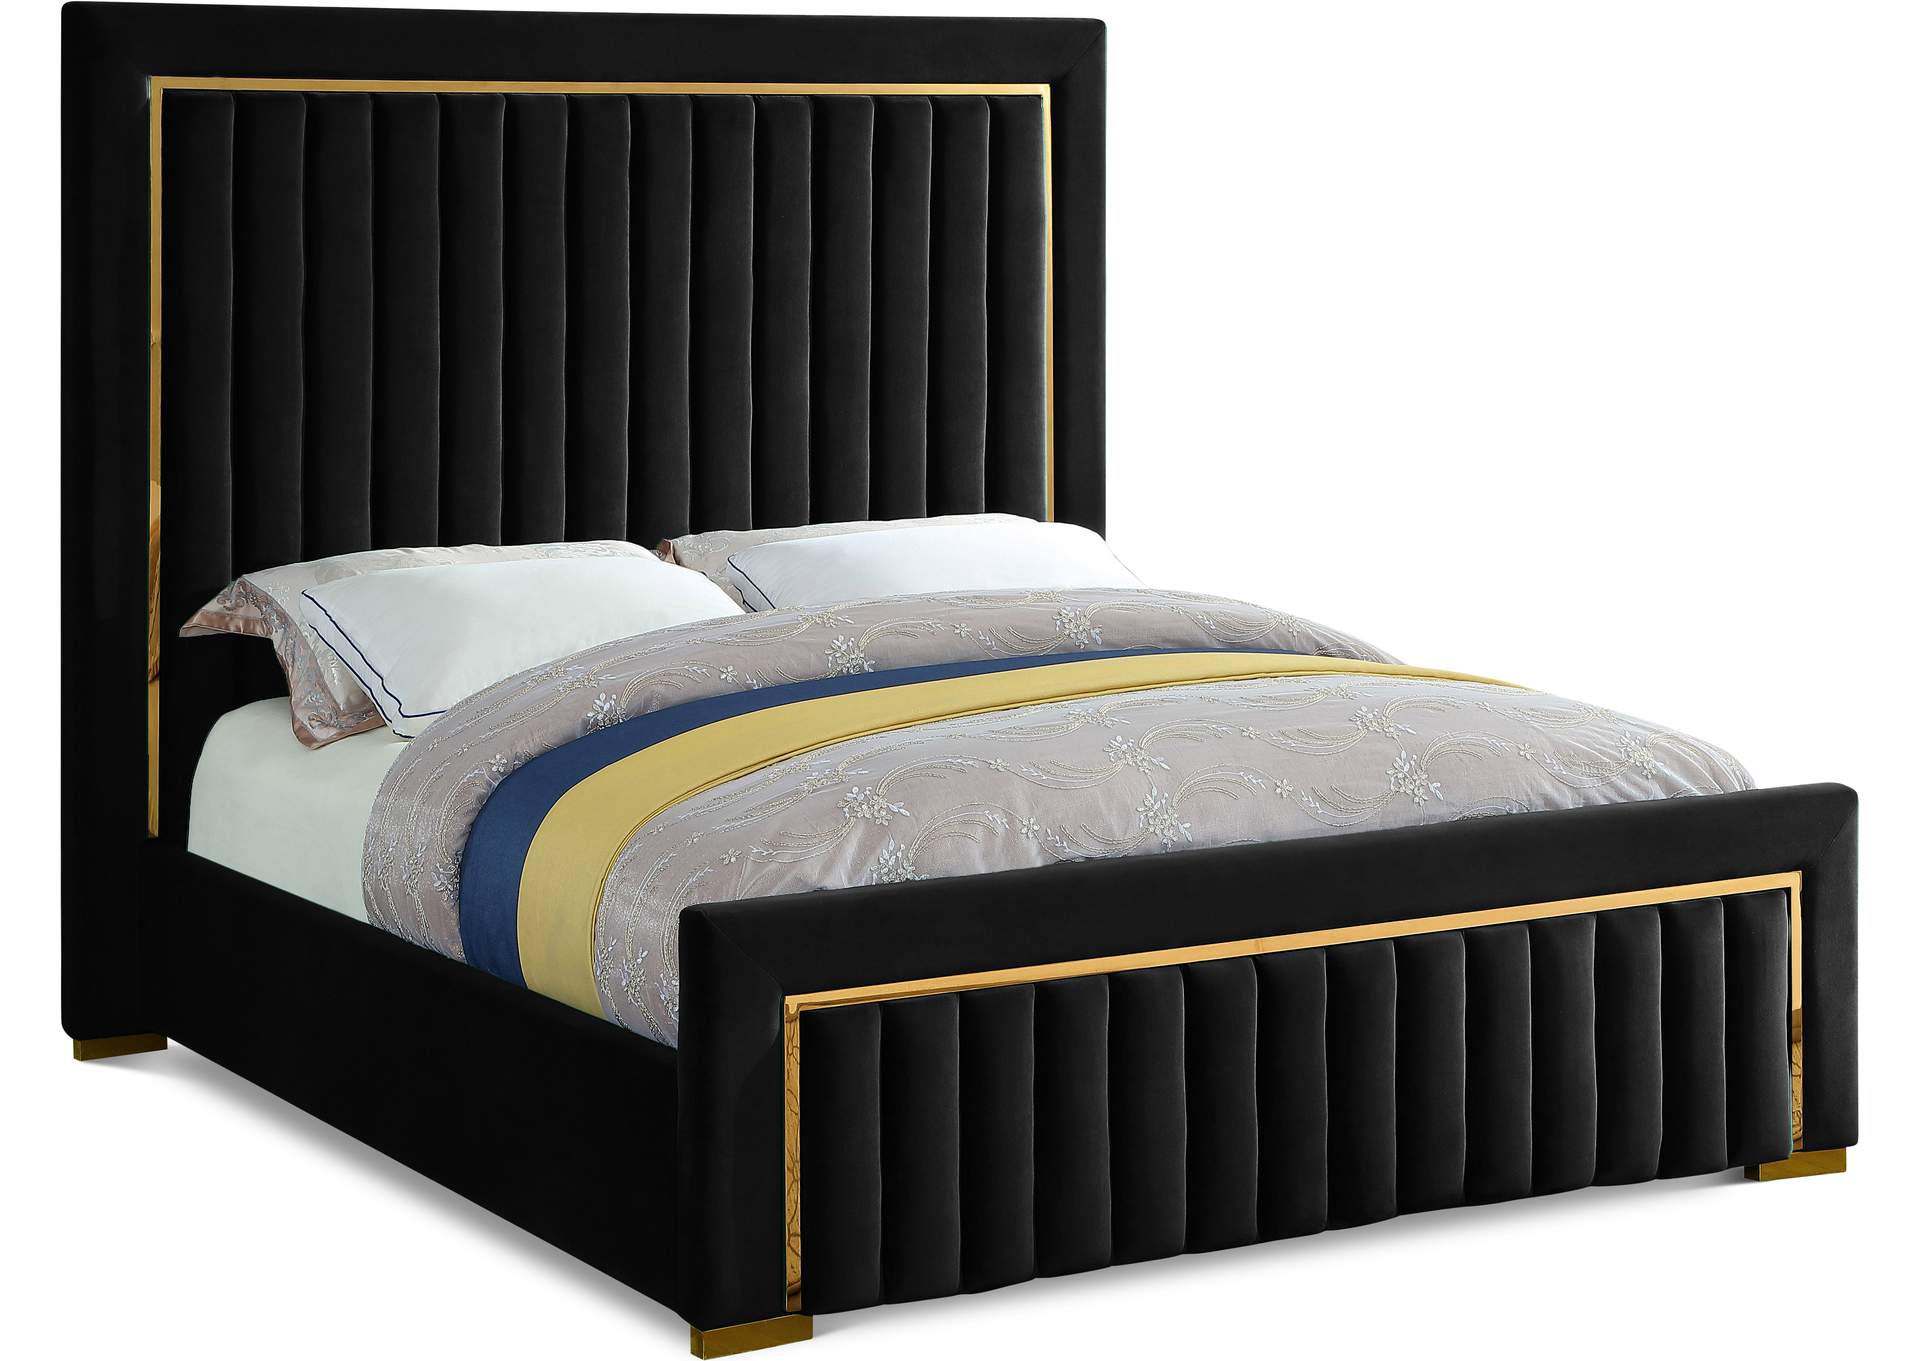 Dolce Black Velvet Queen Bed 3 Boxes, Black Tall Headboard Queen Bed